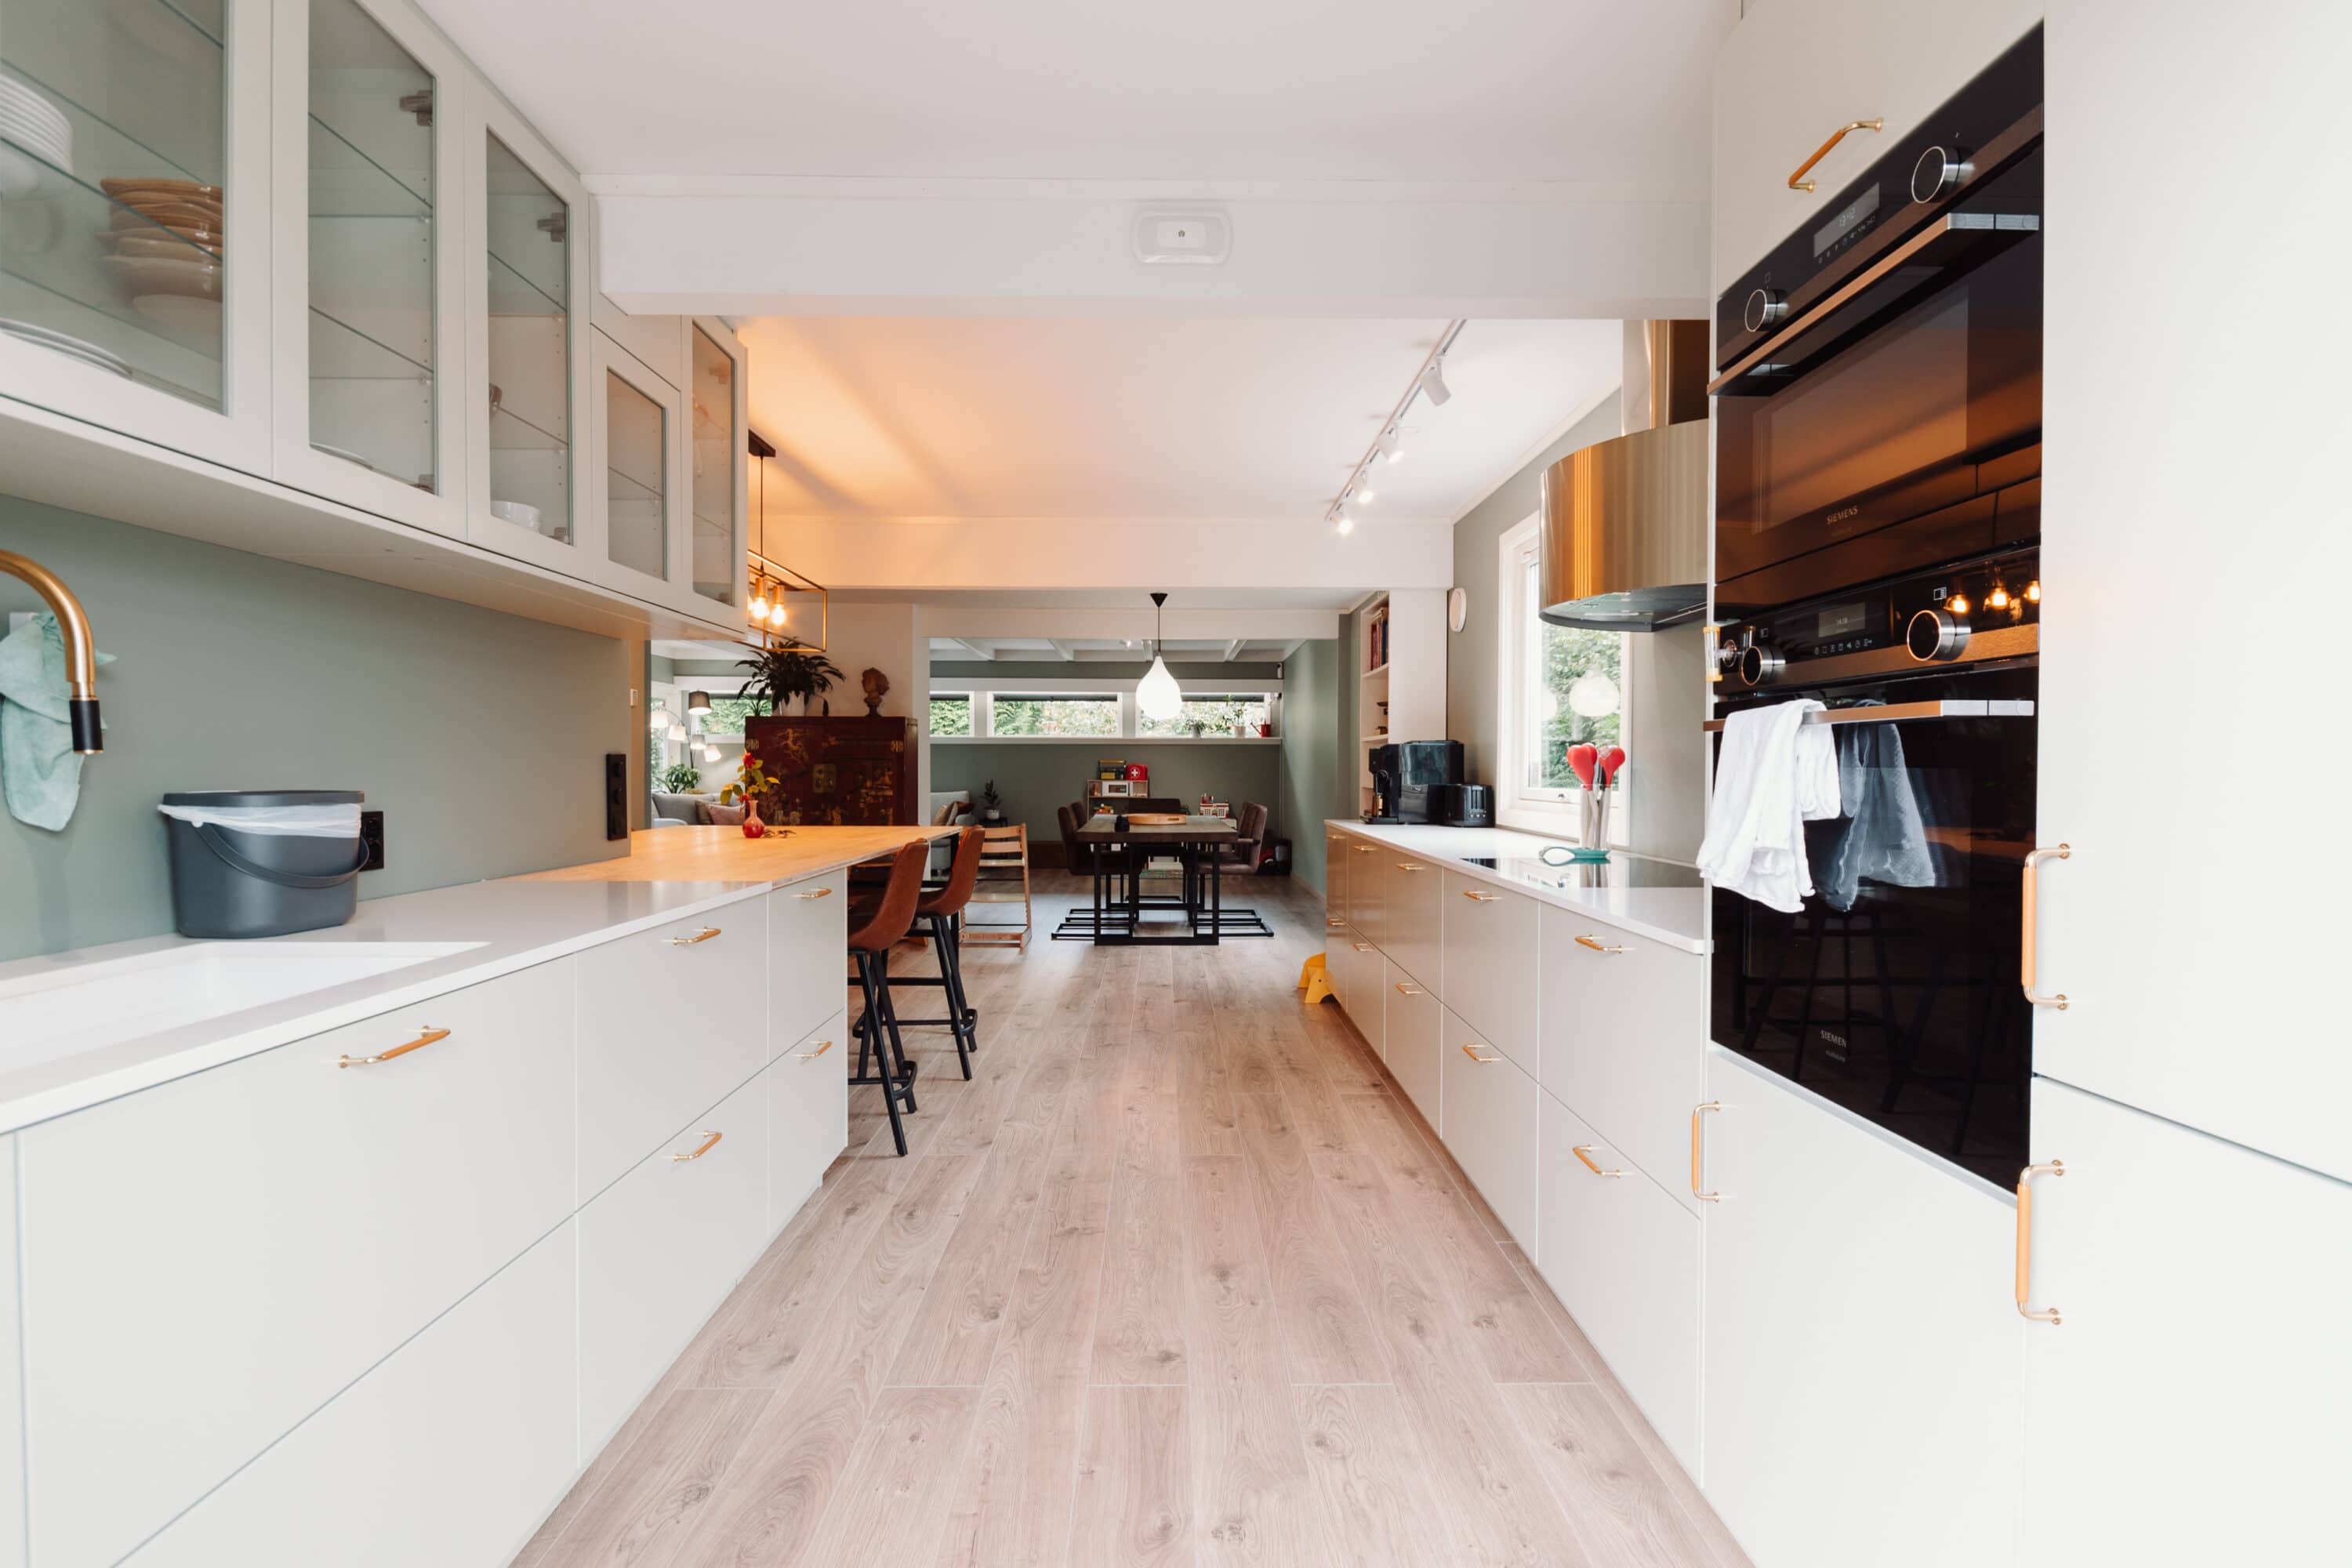 Sharing a look at this minimalist scandinavian kitchen